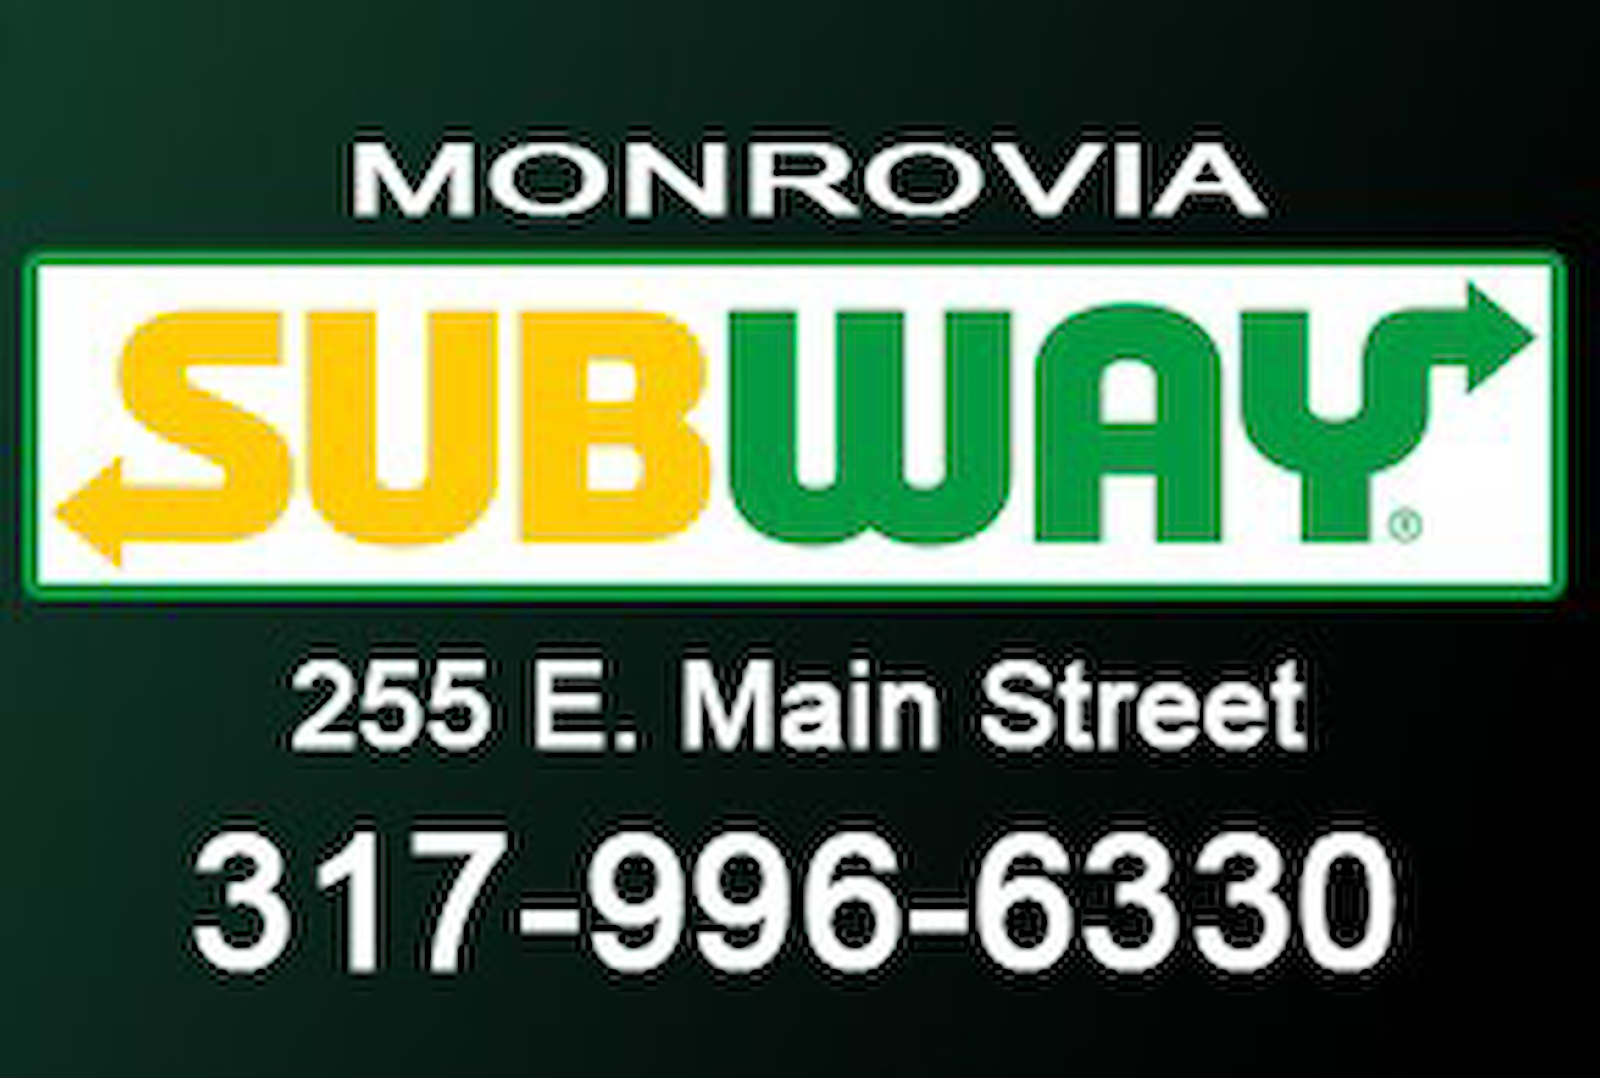 Subway of Monrovia